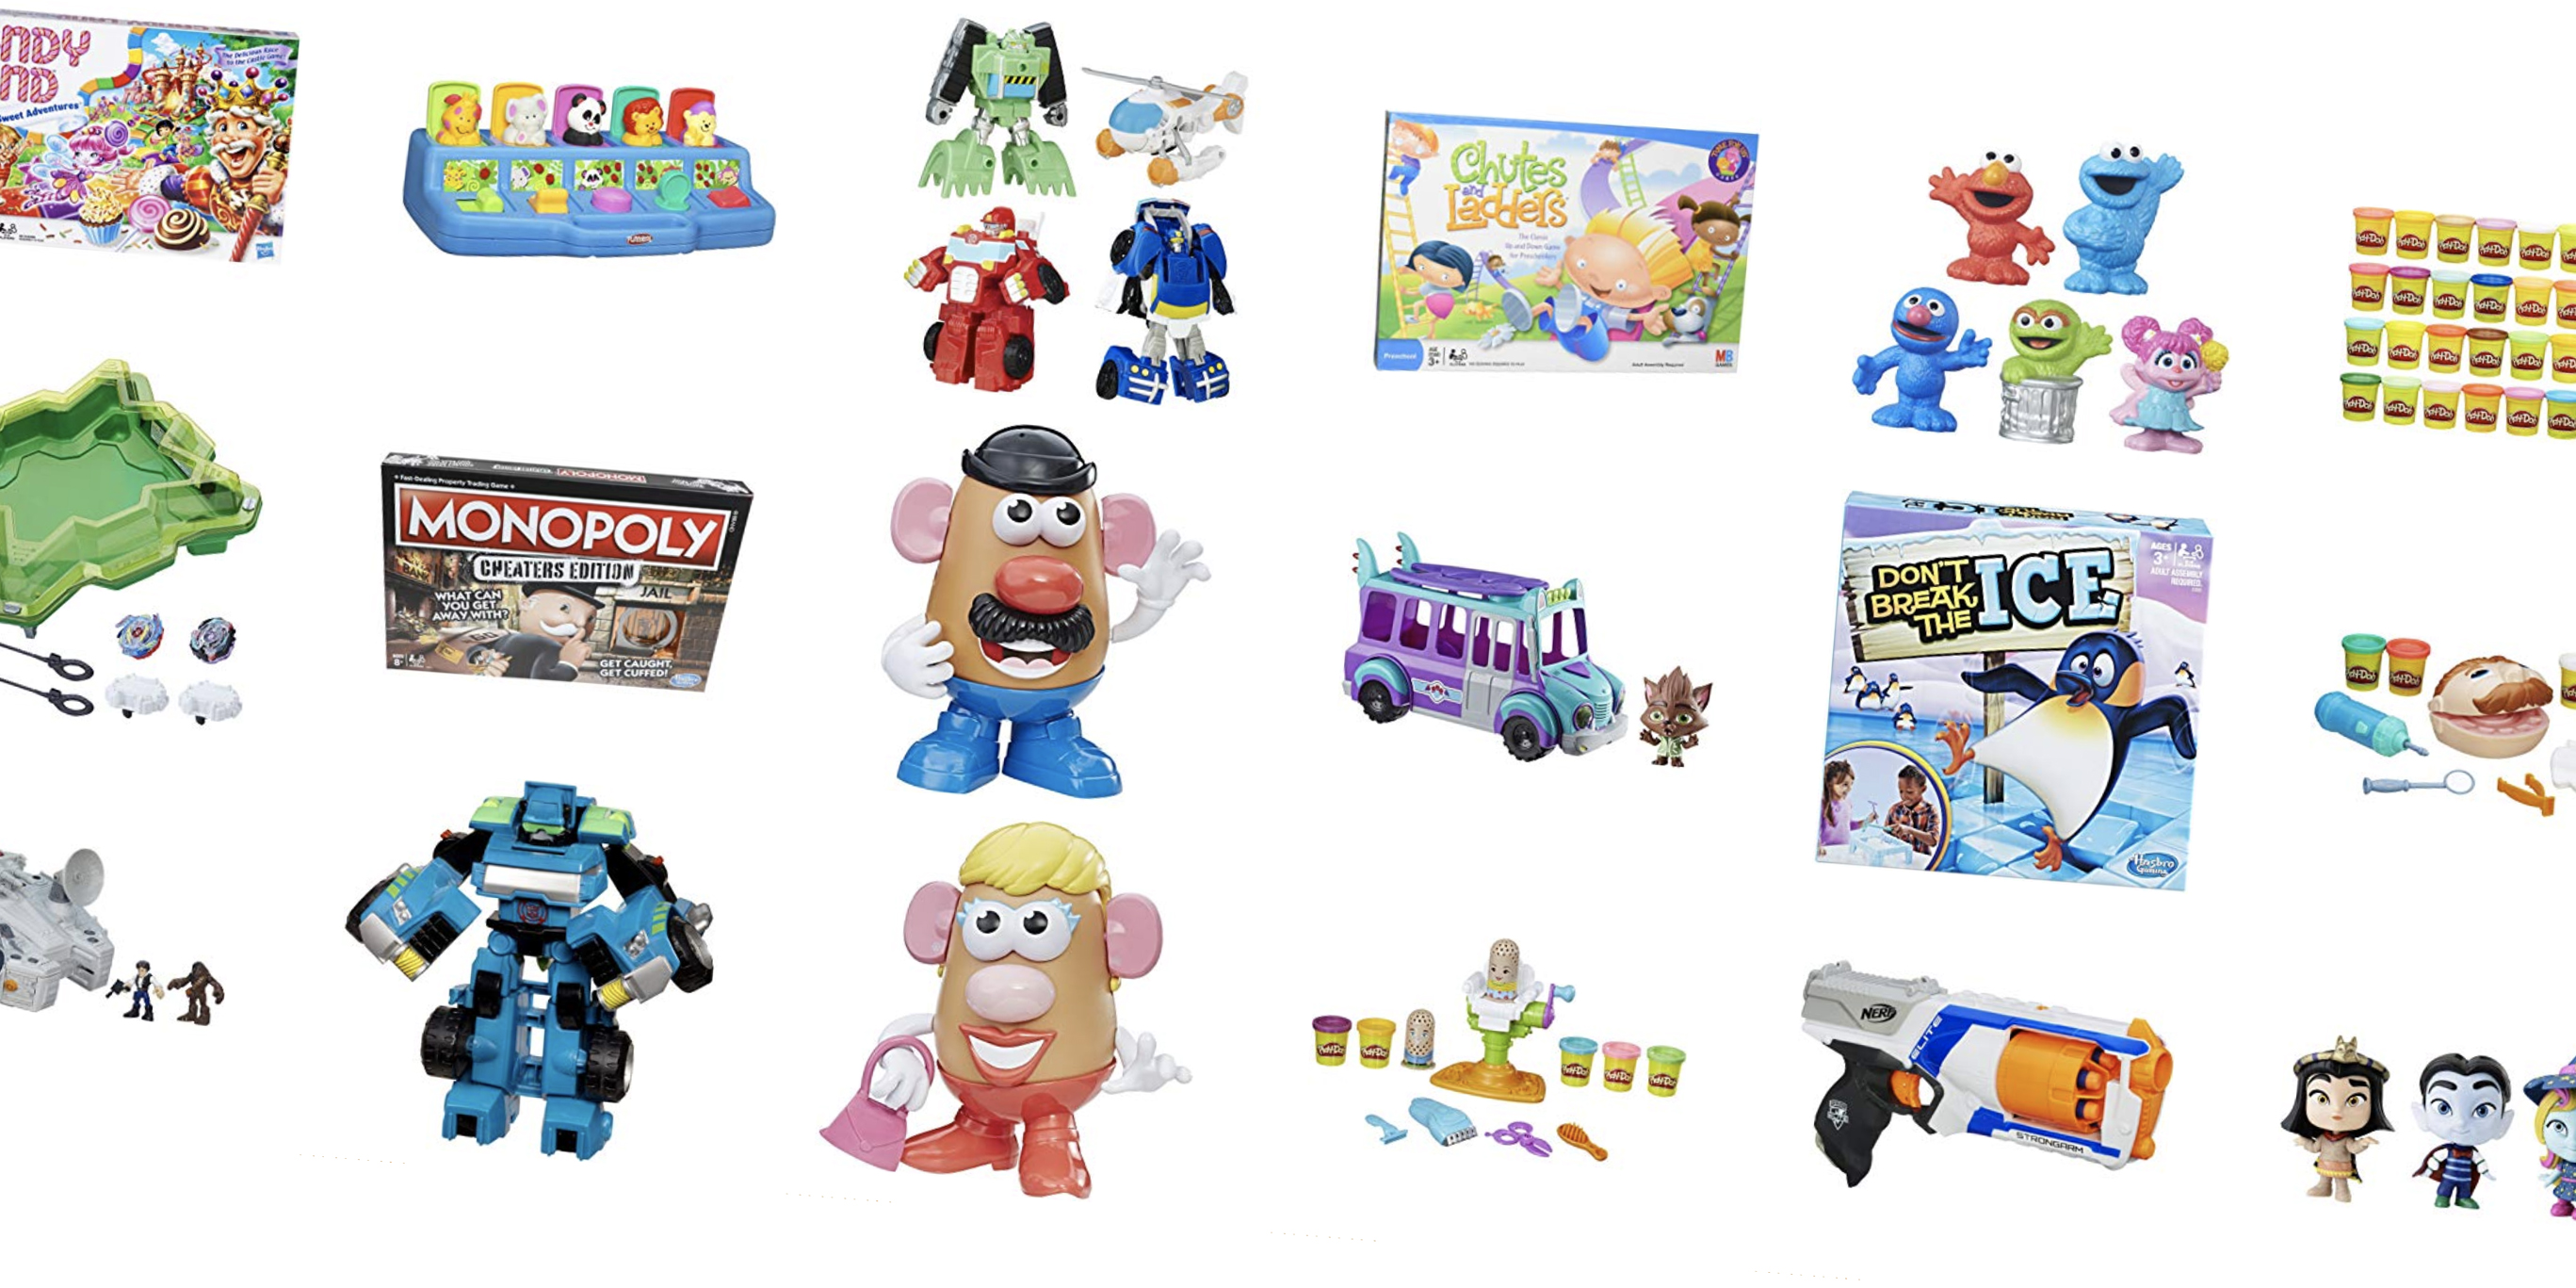 Hasbro toys fill today's Amazon Gold Box from 5 NERF, PlayDoh, board